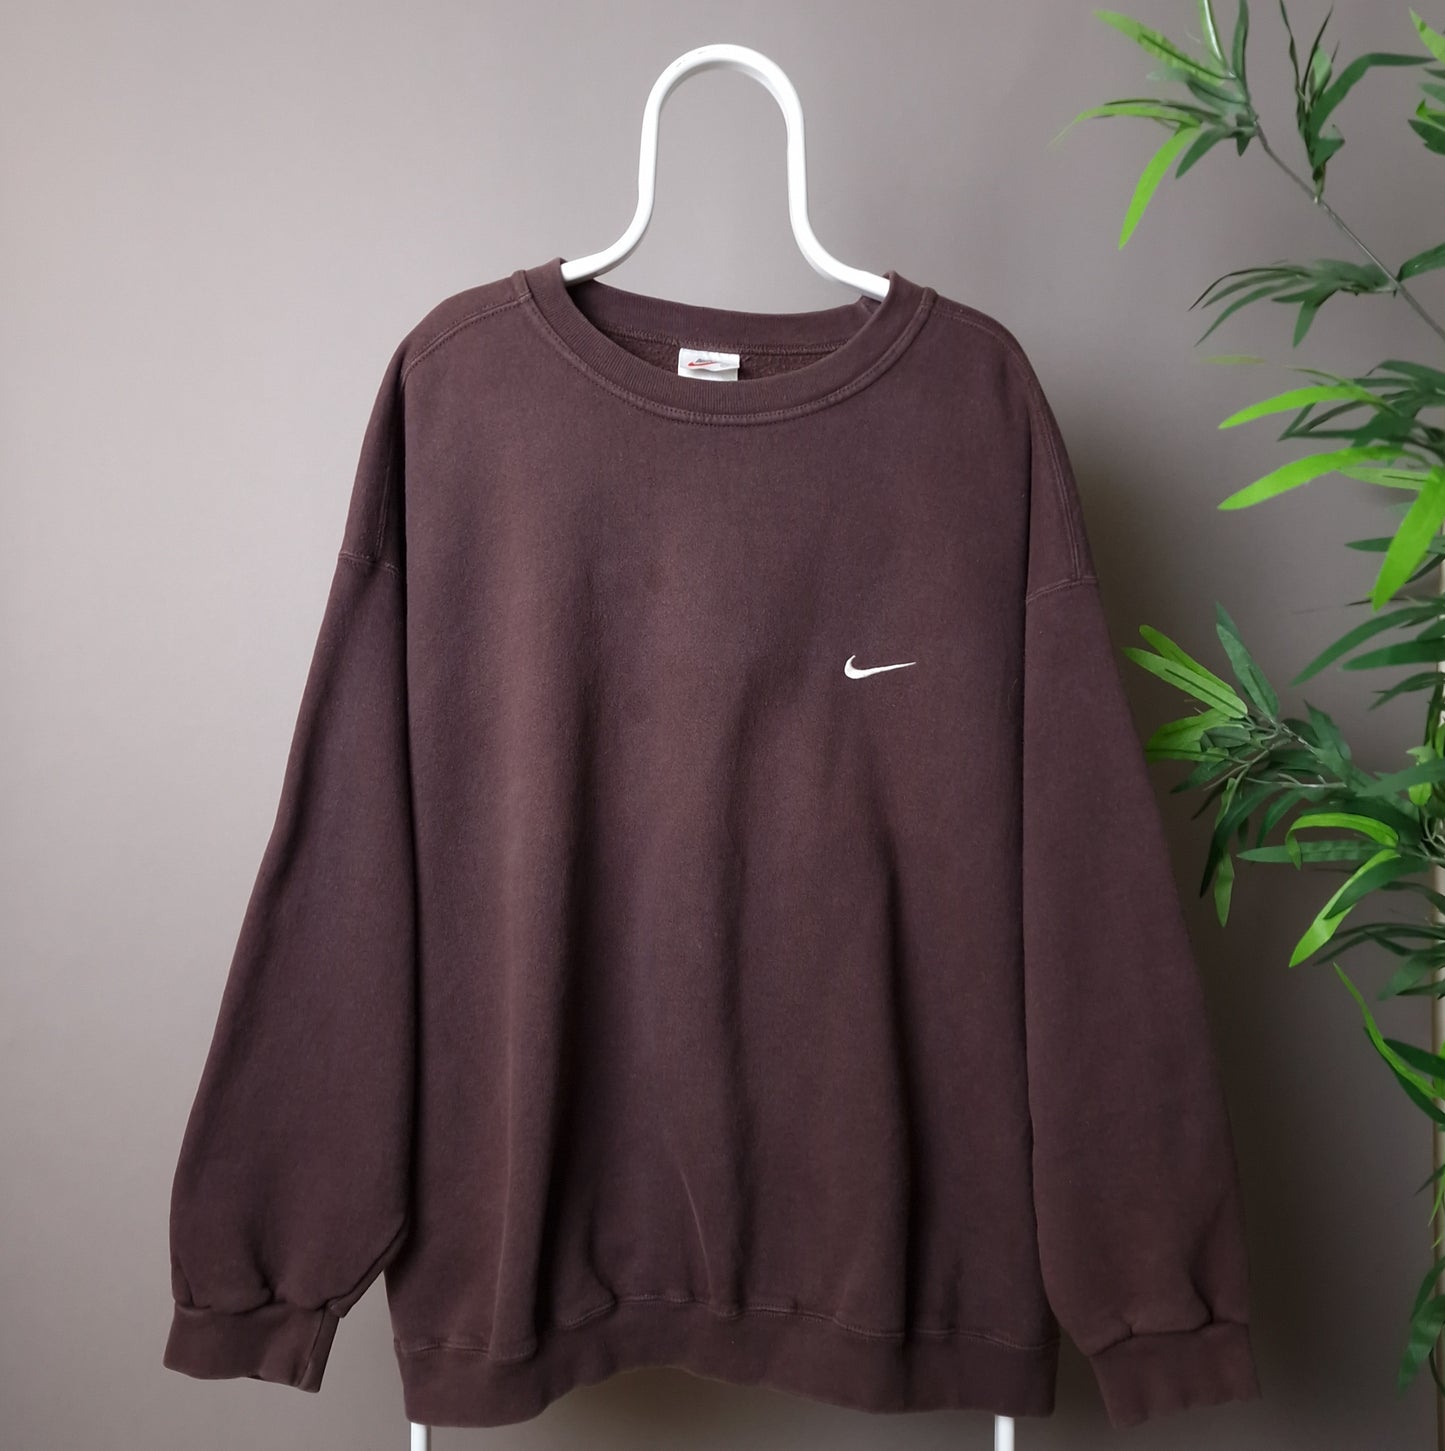 Rare 90s Nike sweatshirt in brown - XXL